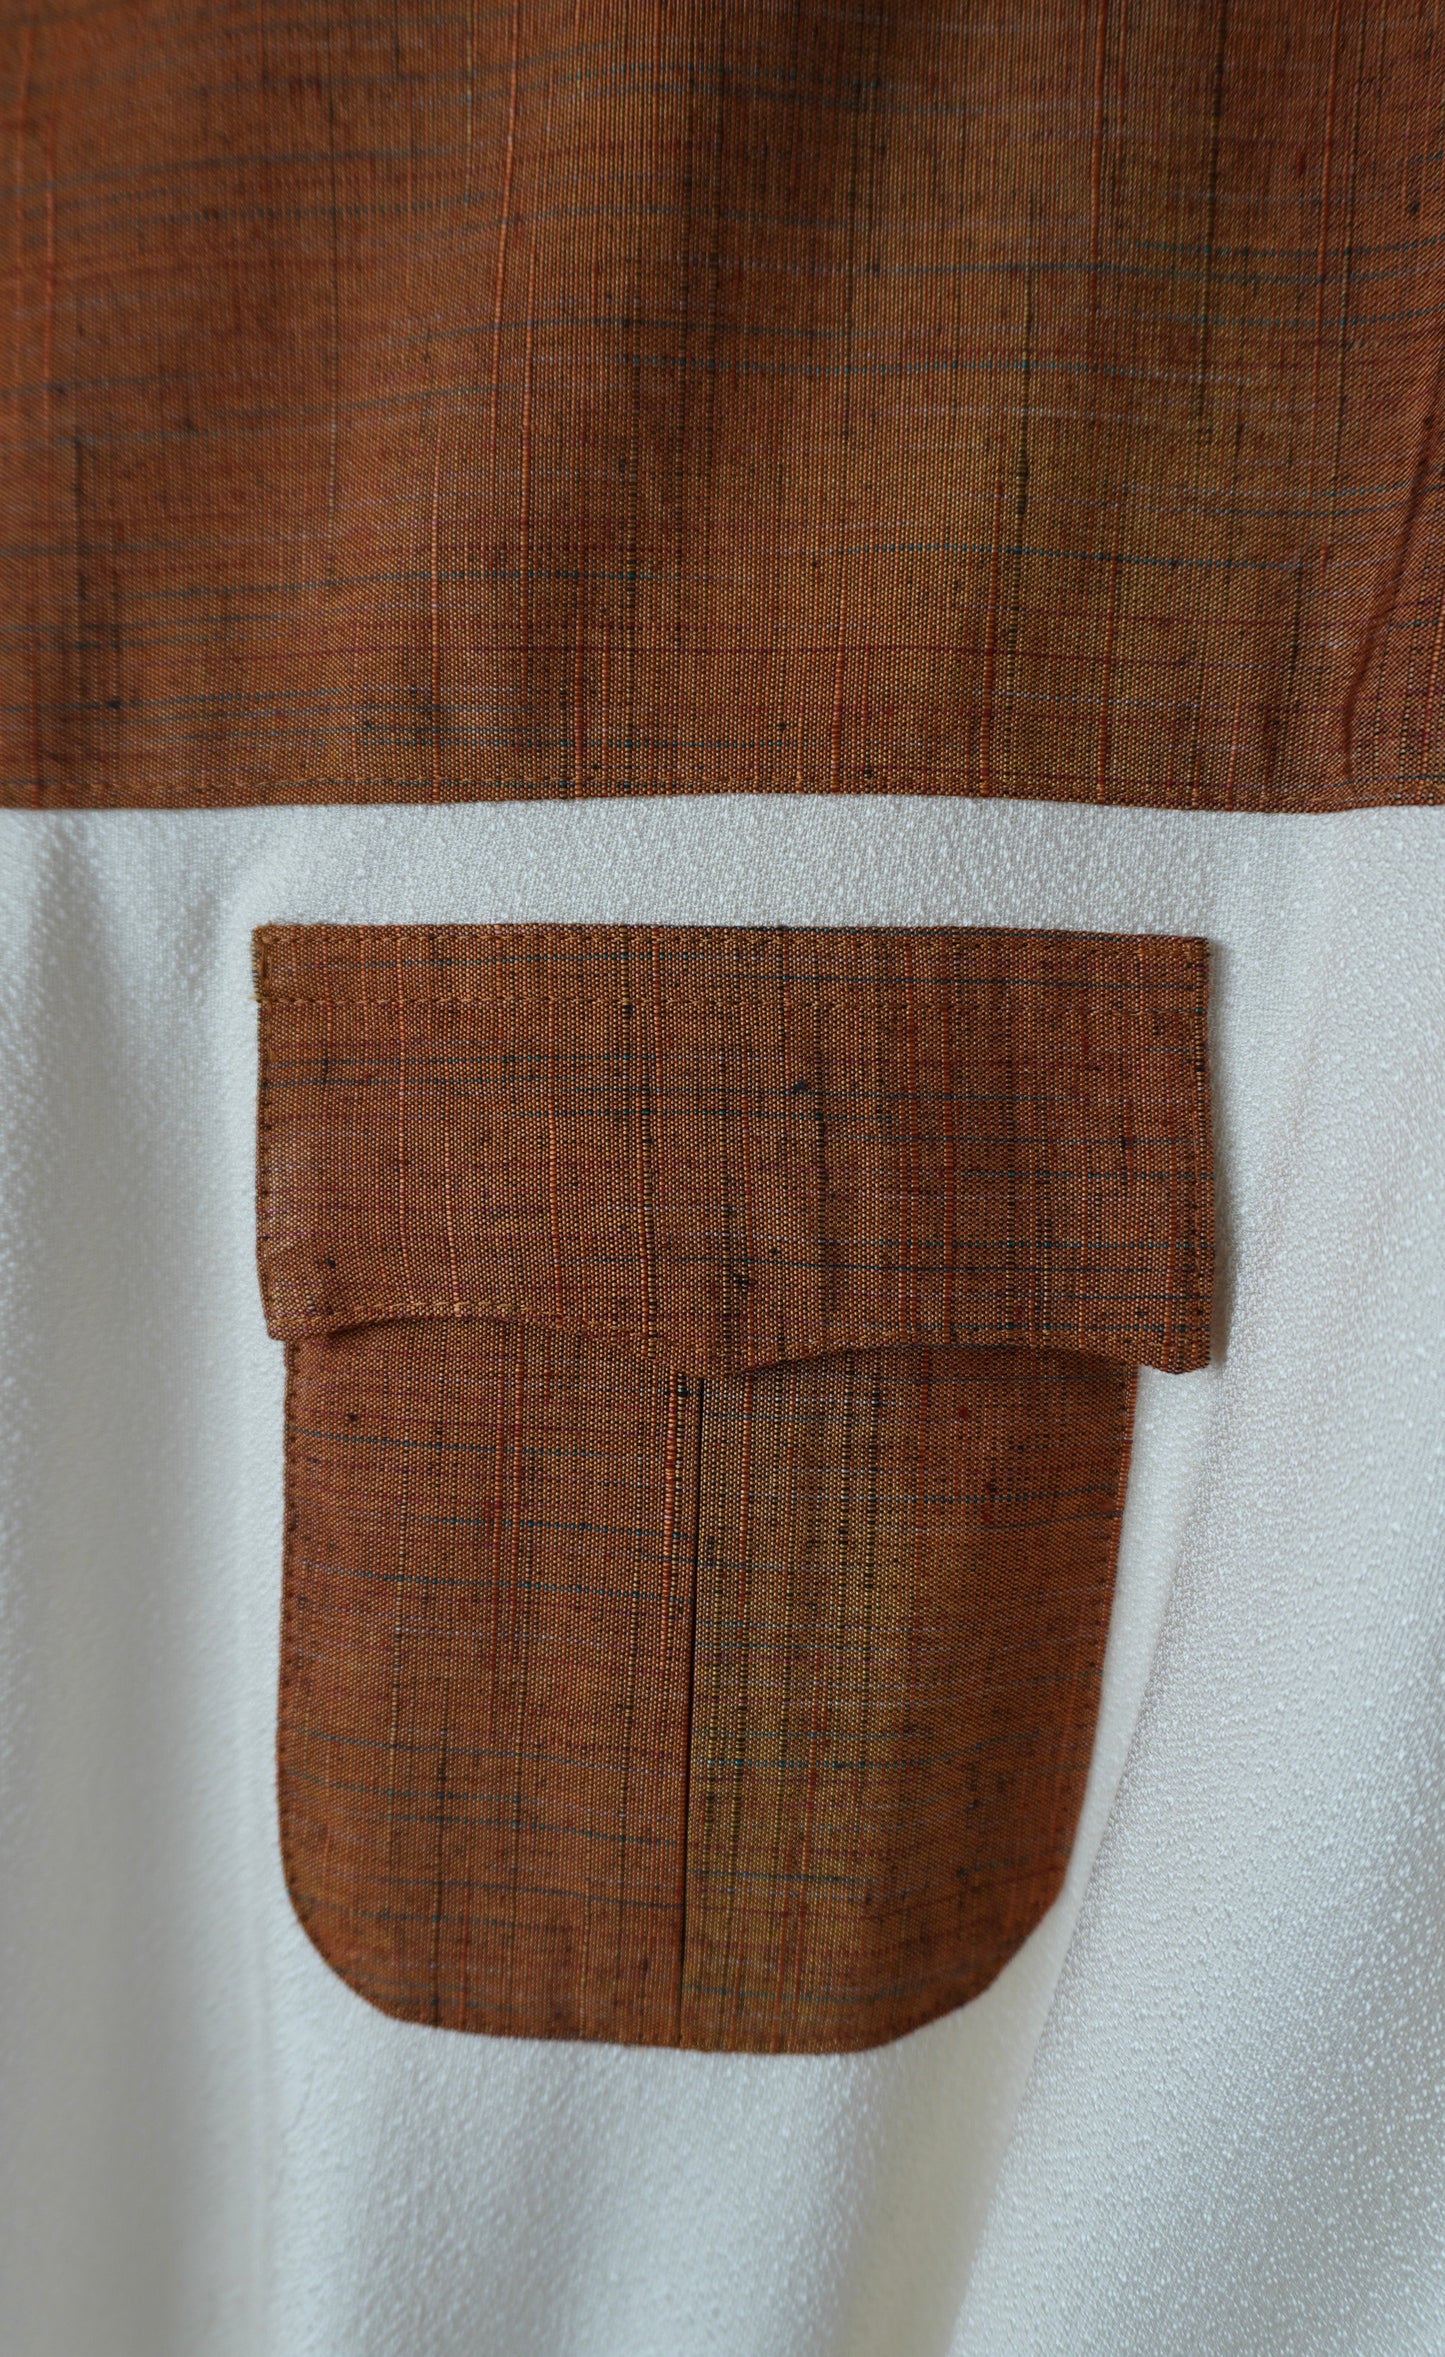 M Size Brown Silk Shirt (No. 46/100)